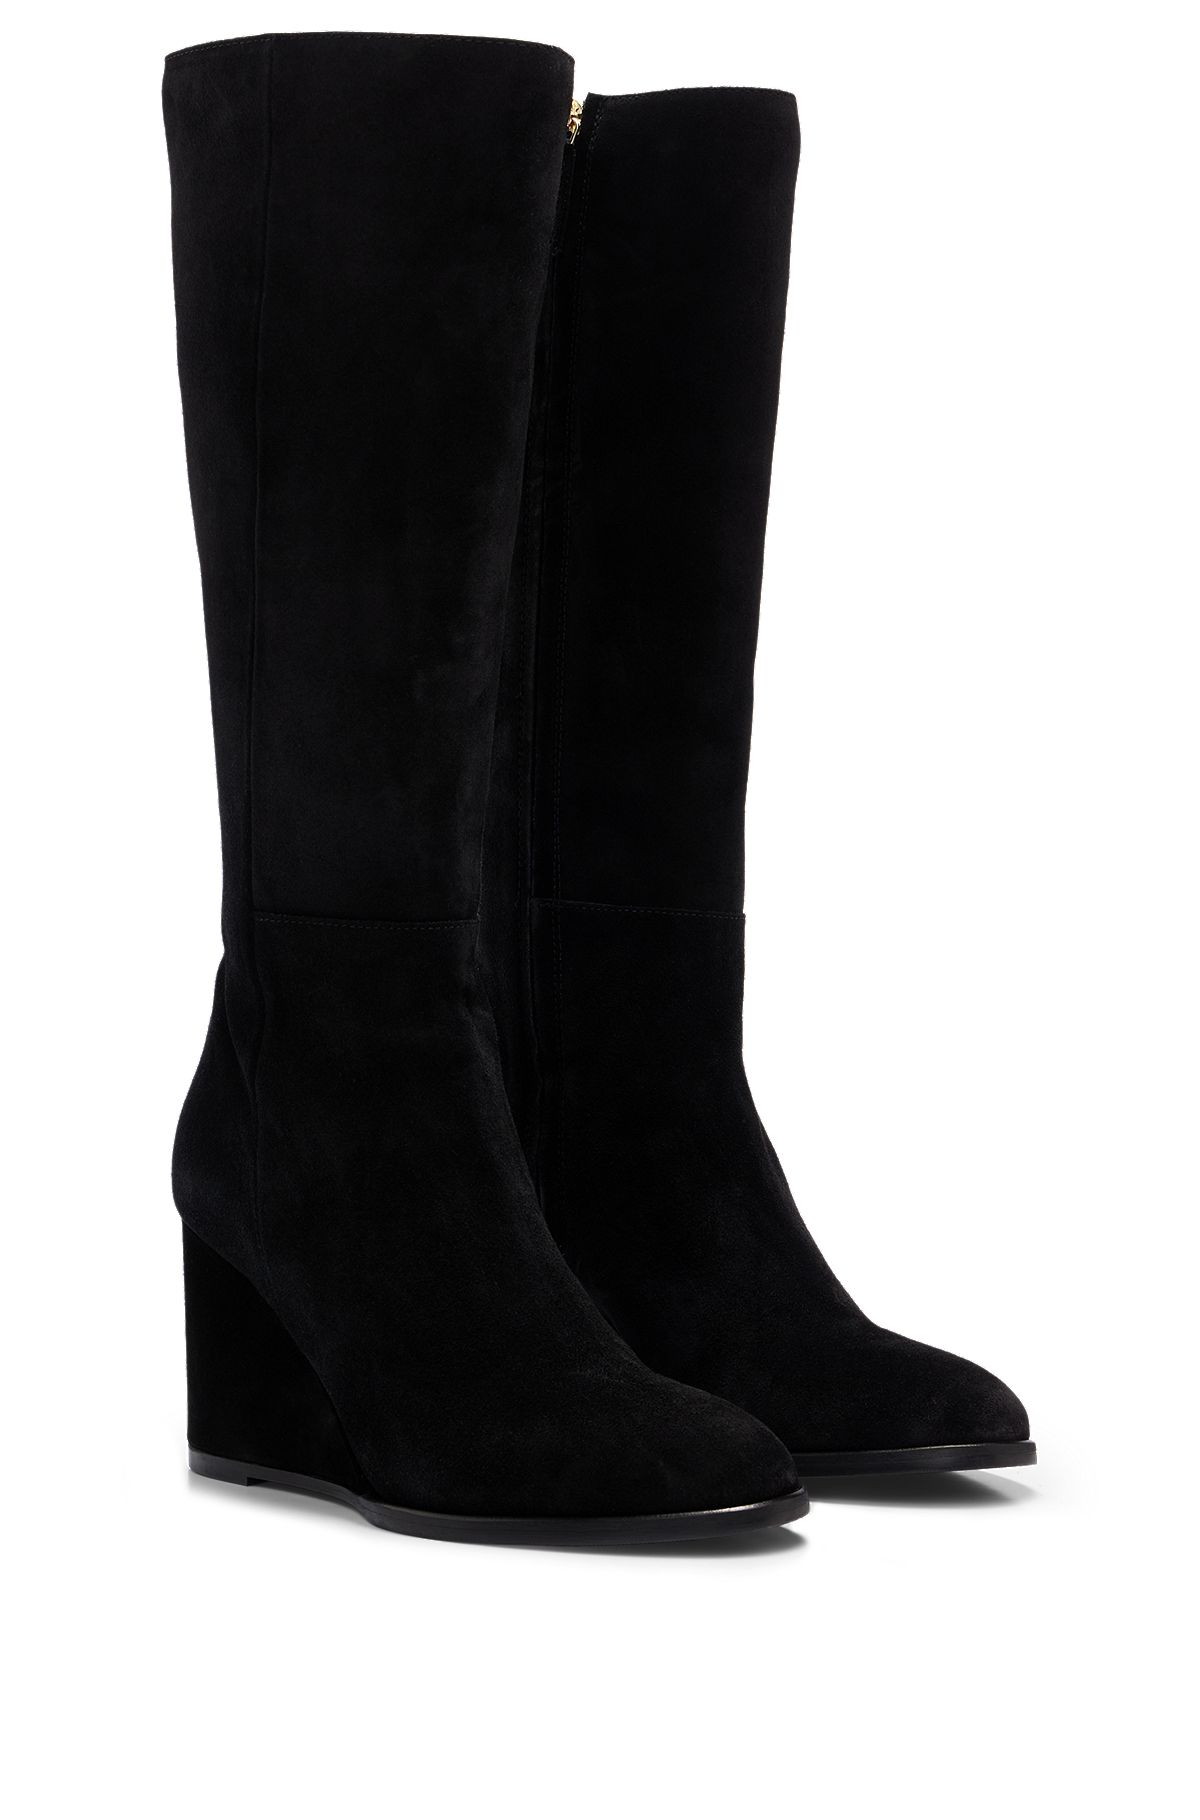 Knee-high boots in suede with wedge heel, Black